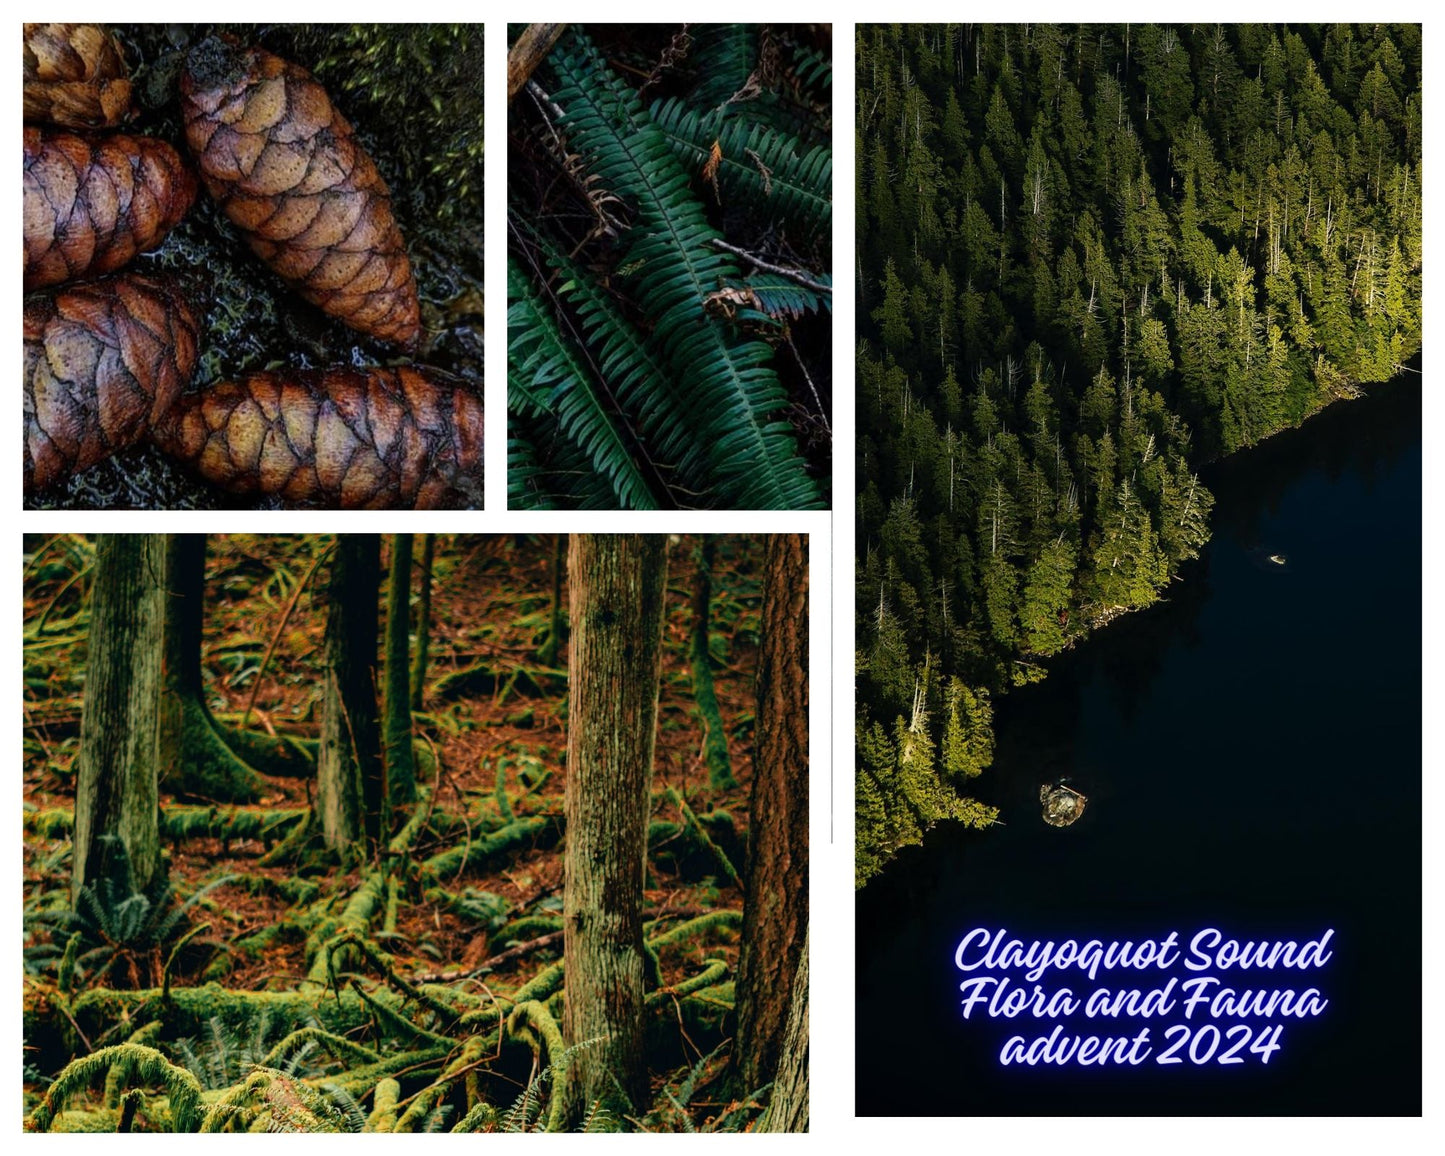 Clayoquot Sound: Flora and Fauna PRESALE ADVENT 2024